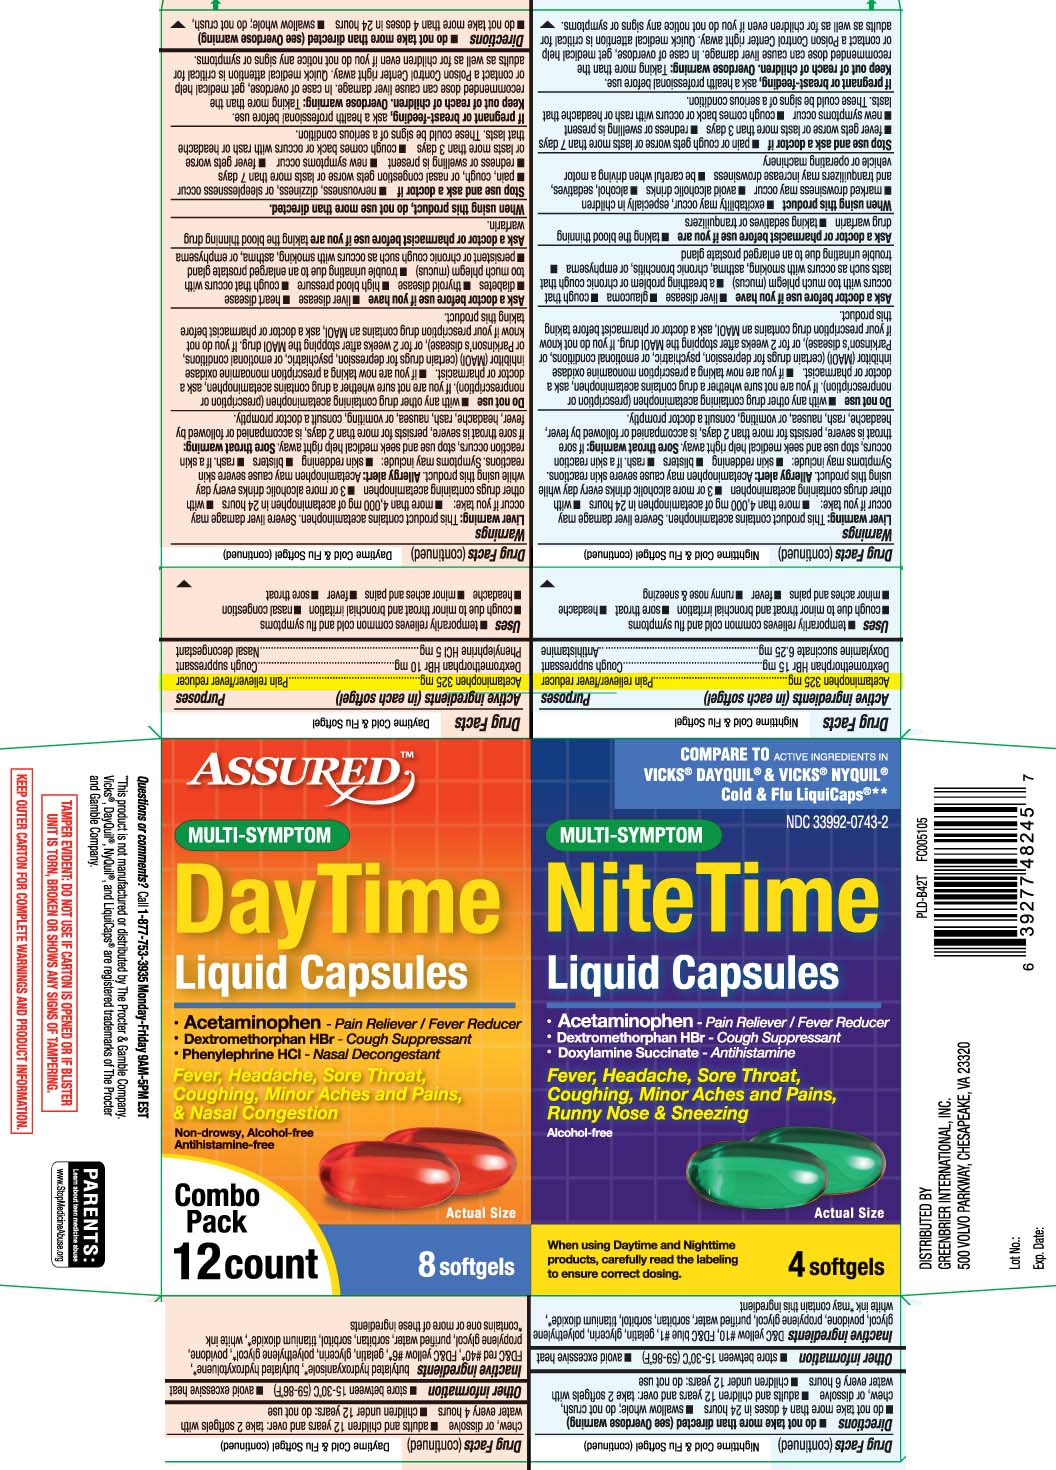 Acetaminophen 325 mg, Dextromethorphan HBr 10 mg, Phenylephrine HCI 5 mg, Acetaminophen 325 mg, Dextromethorphan HBr 15 mg, Doxylamine Succinate 6.25 mg